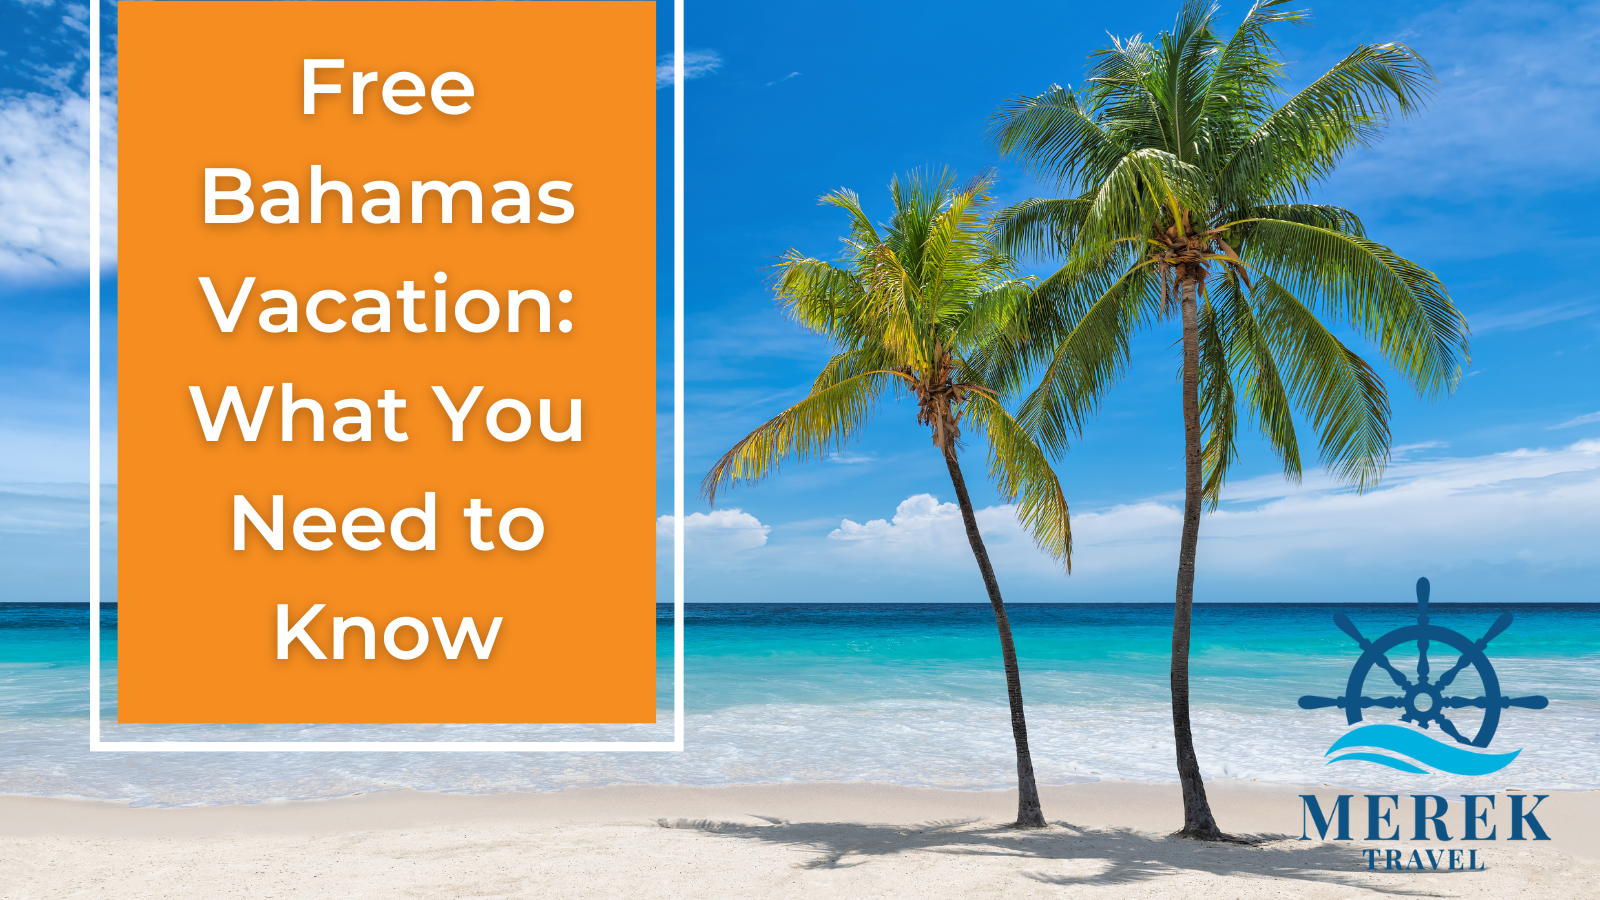 free bahamas vacation for 2 merek travel